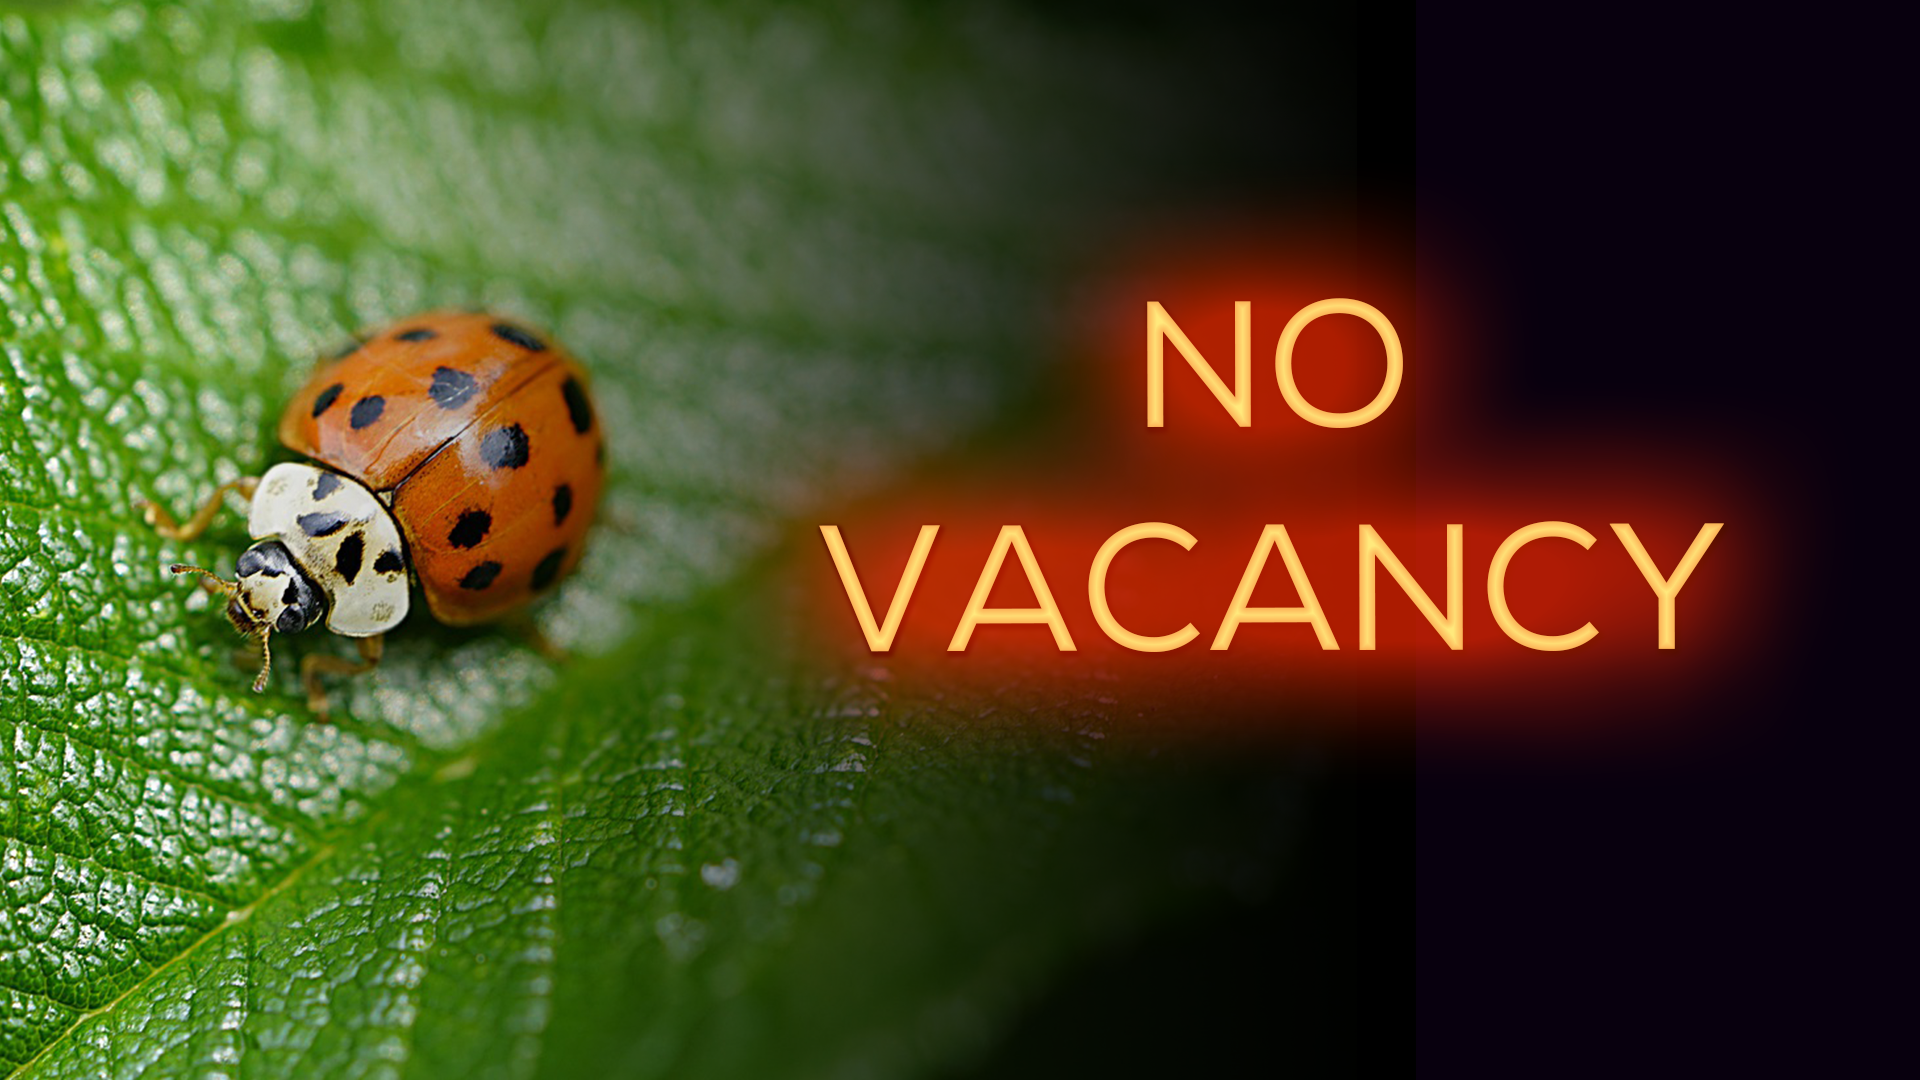 No Vacancy Asian lady bugs